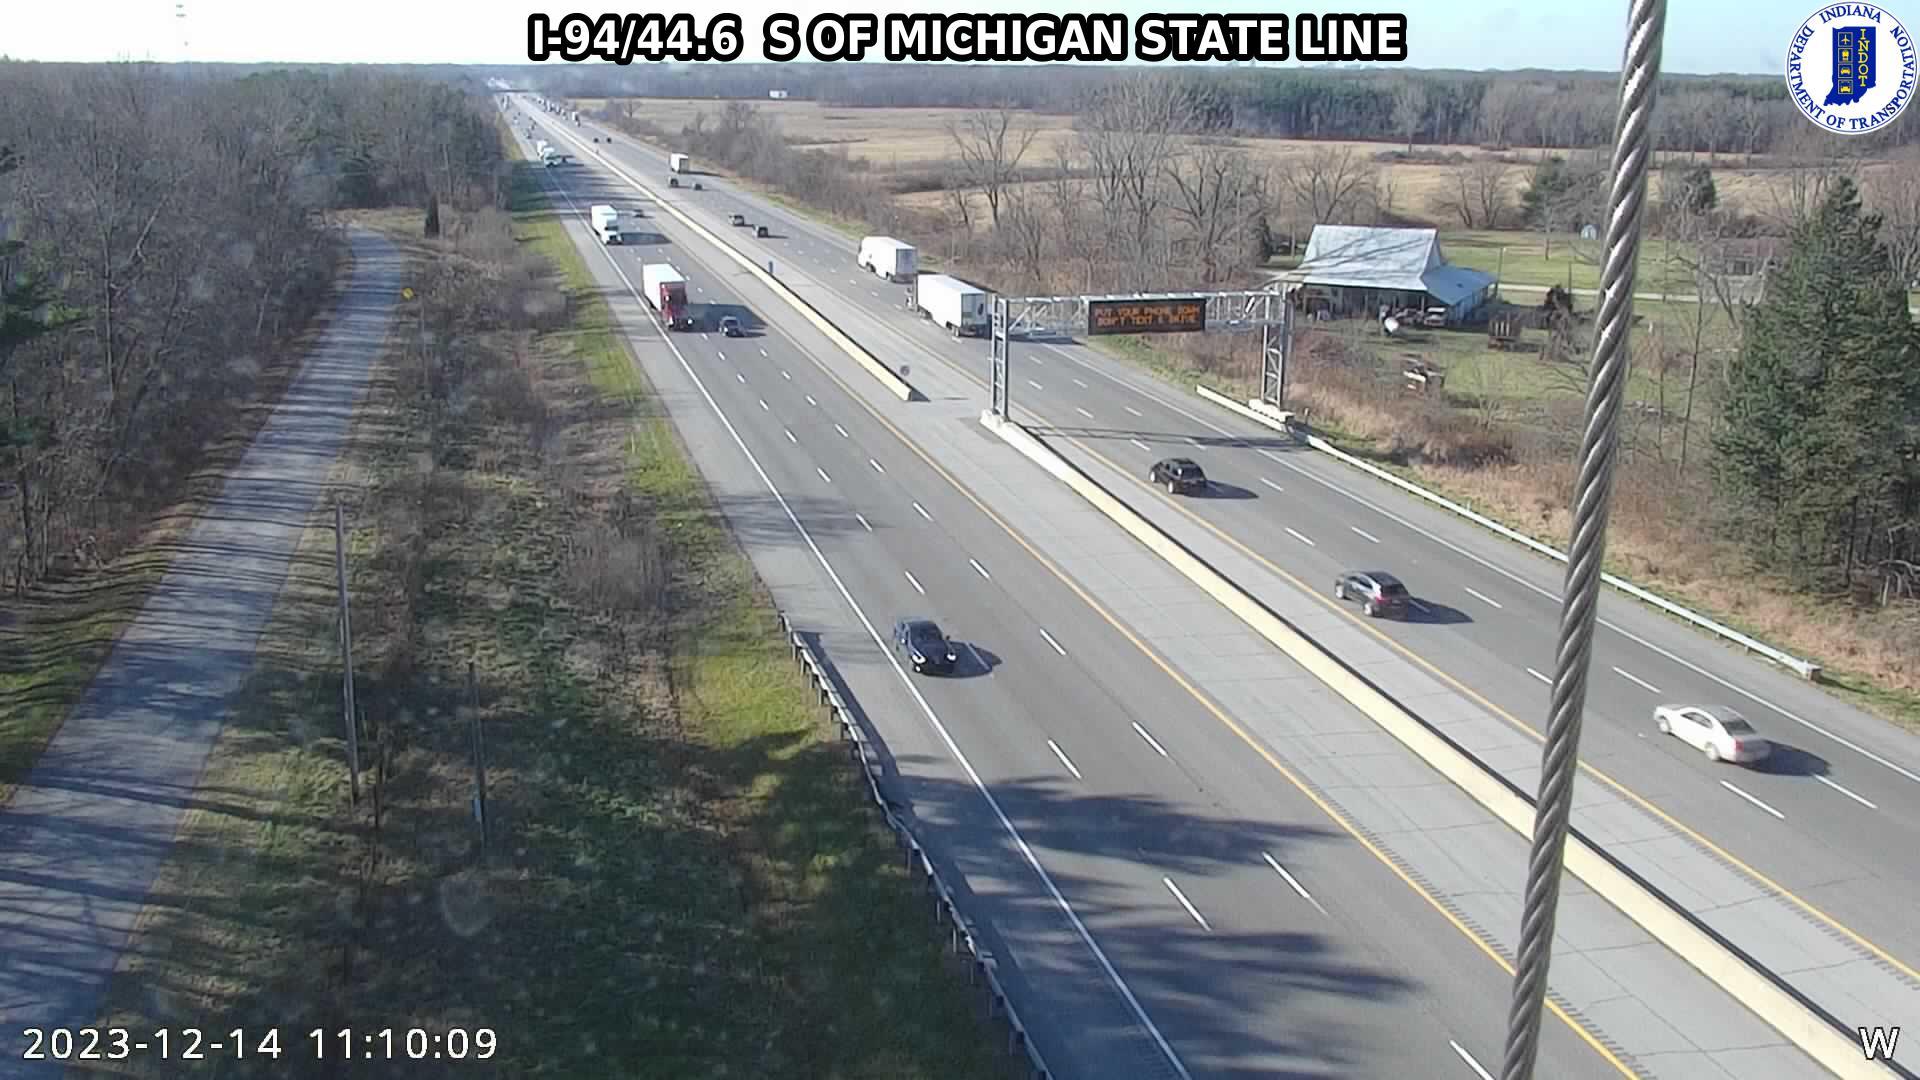 Traffic Cam Andry: I-94: I-94/44.6 S OF MICHIGAN STATE LINE: I-94/44.6 S OF MICHIGAN STATE LINE Player